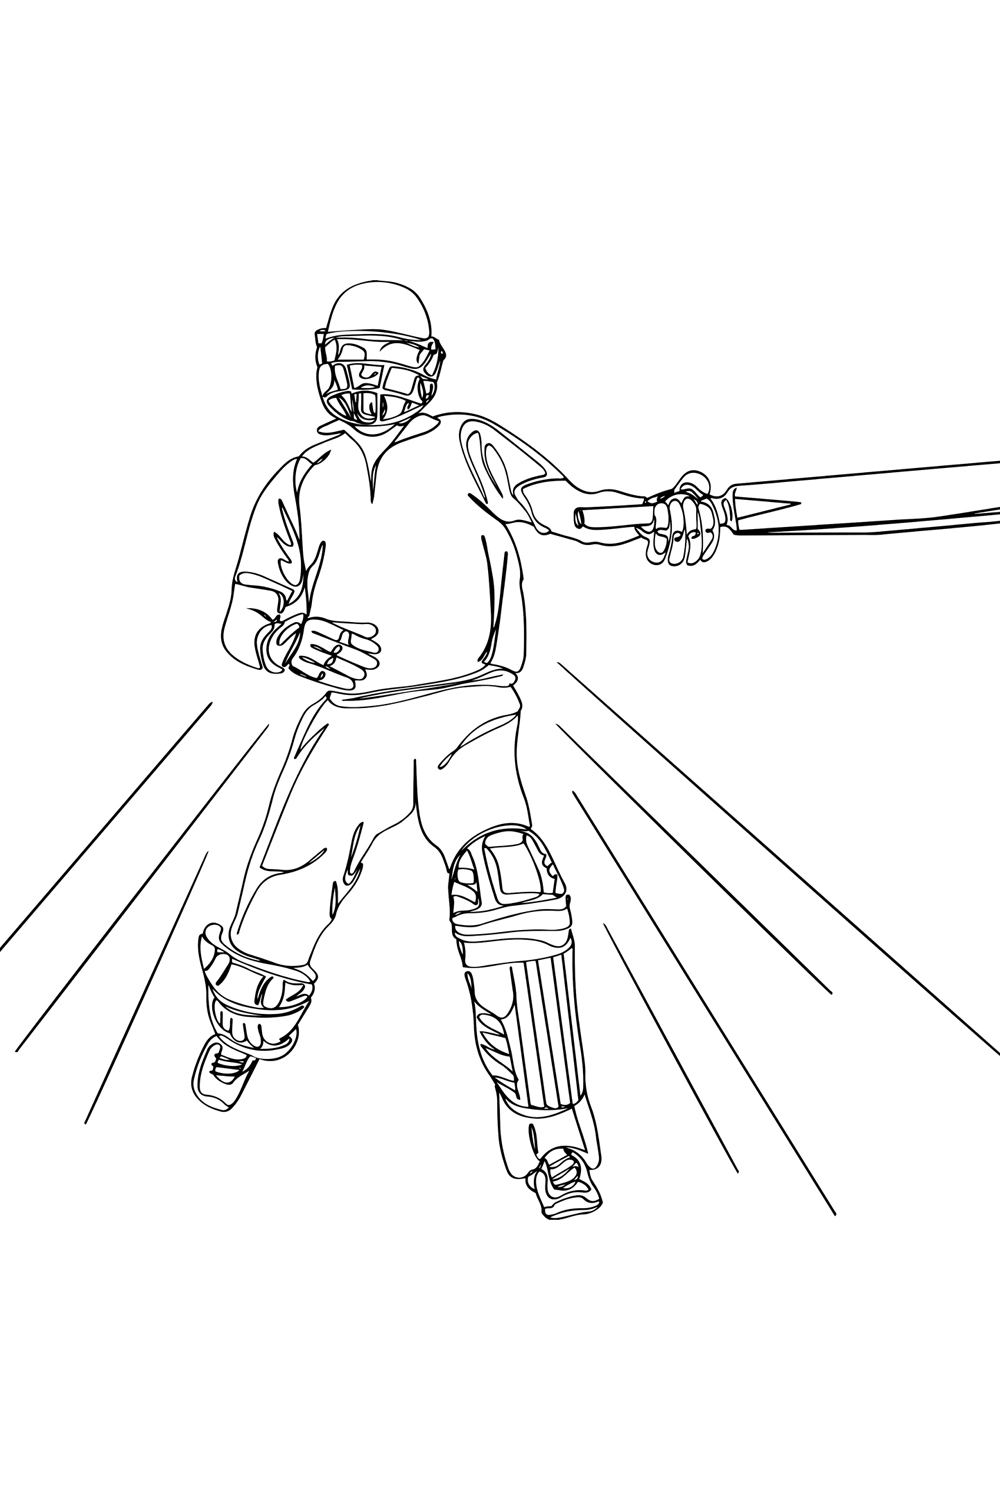 Victorious Jubilation: Hand-Drawn Illustration of Cricket Batsman's Century Leap, Cartoon Elation: Cricket Batsman Soars High in Celebration of a Century, cricket game vector pinterest preview image.